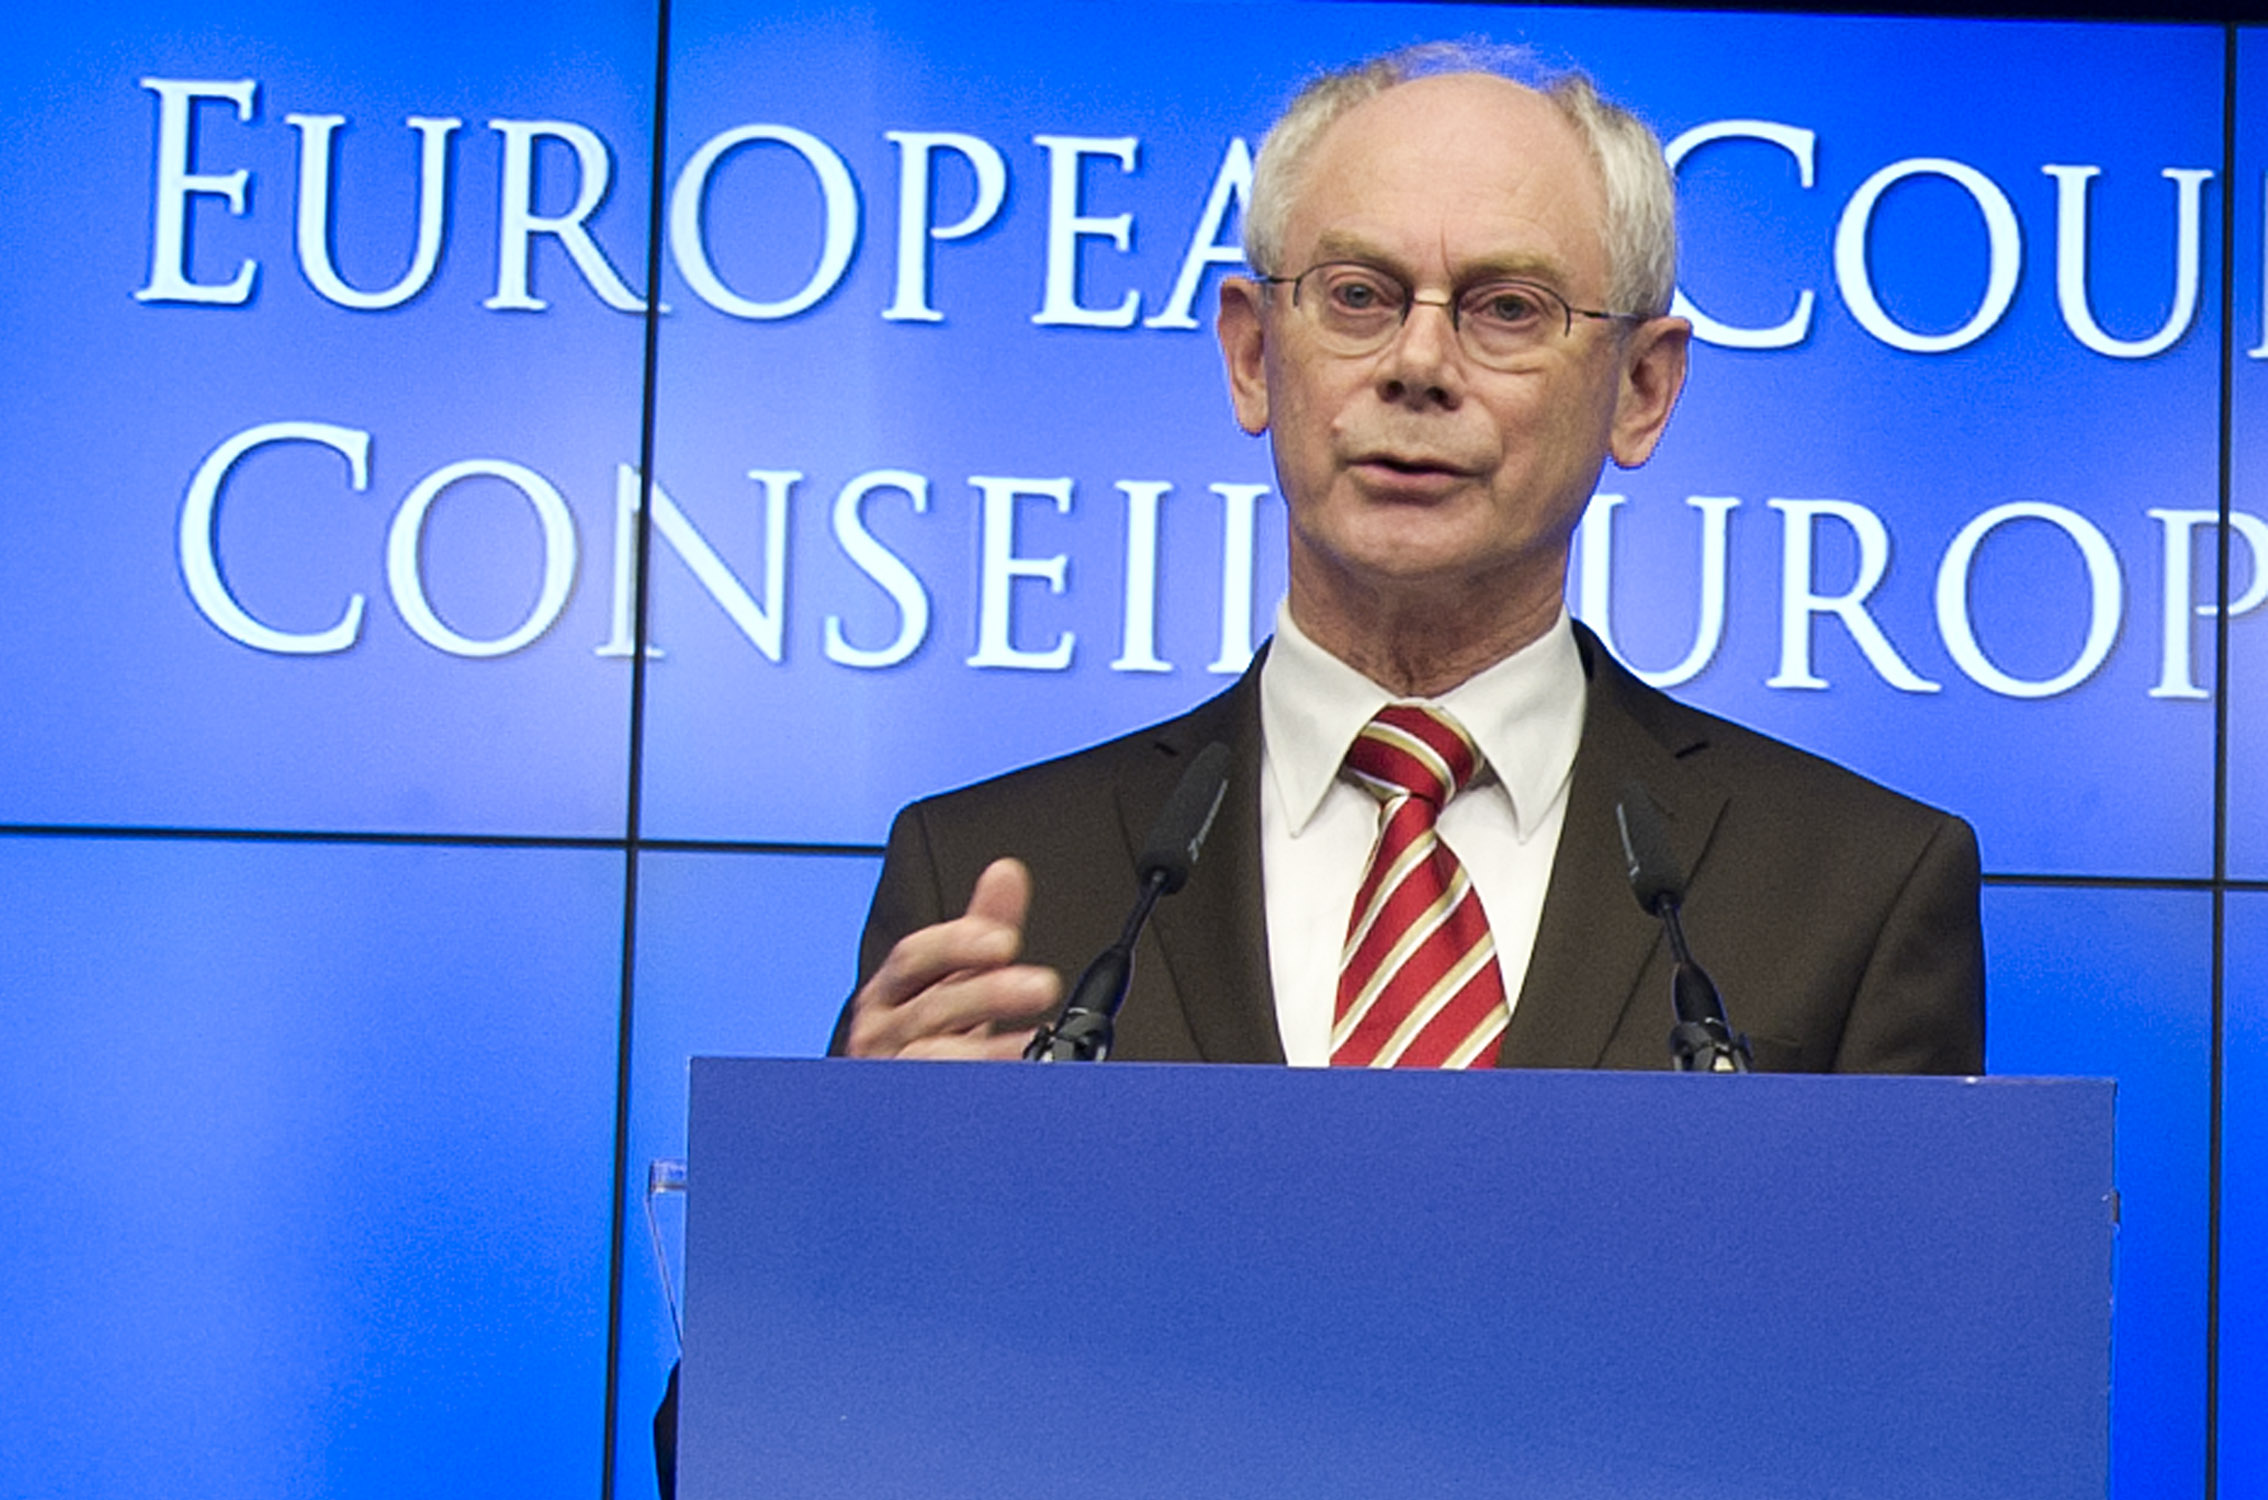 The President of the EU Herman van Rompuy